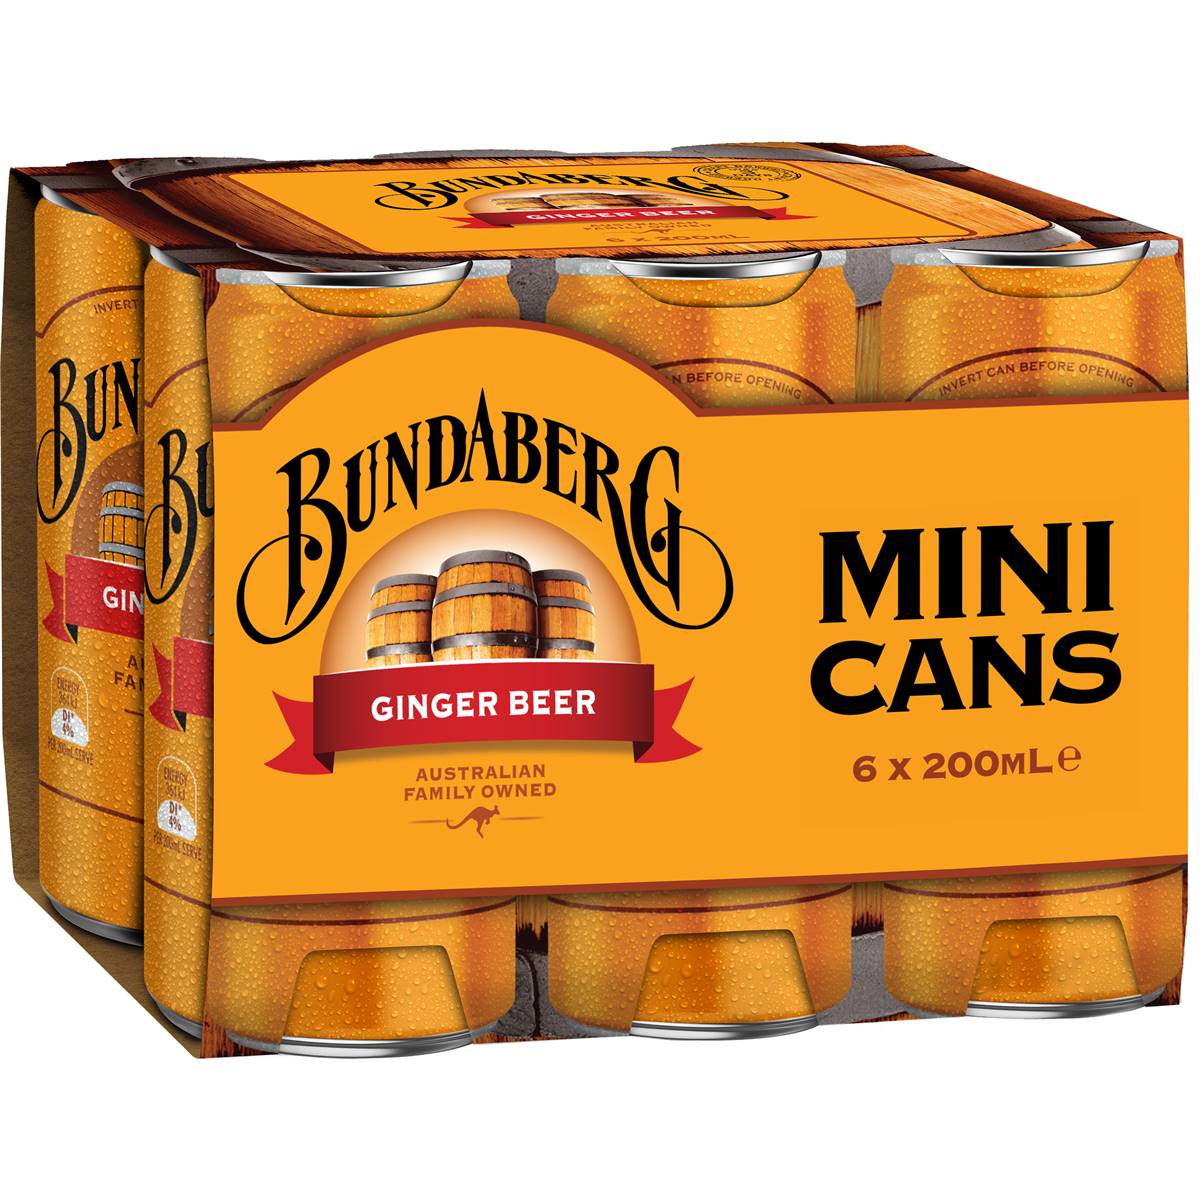 Bundaberg Ginger Beer Mini Cans 6x200ml